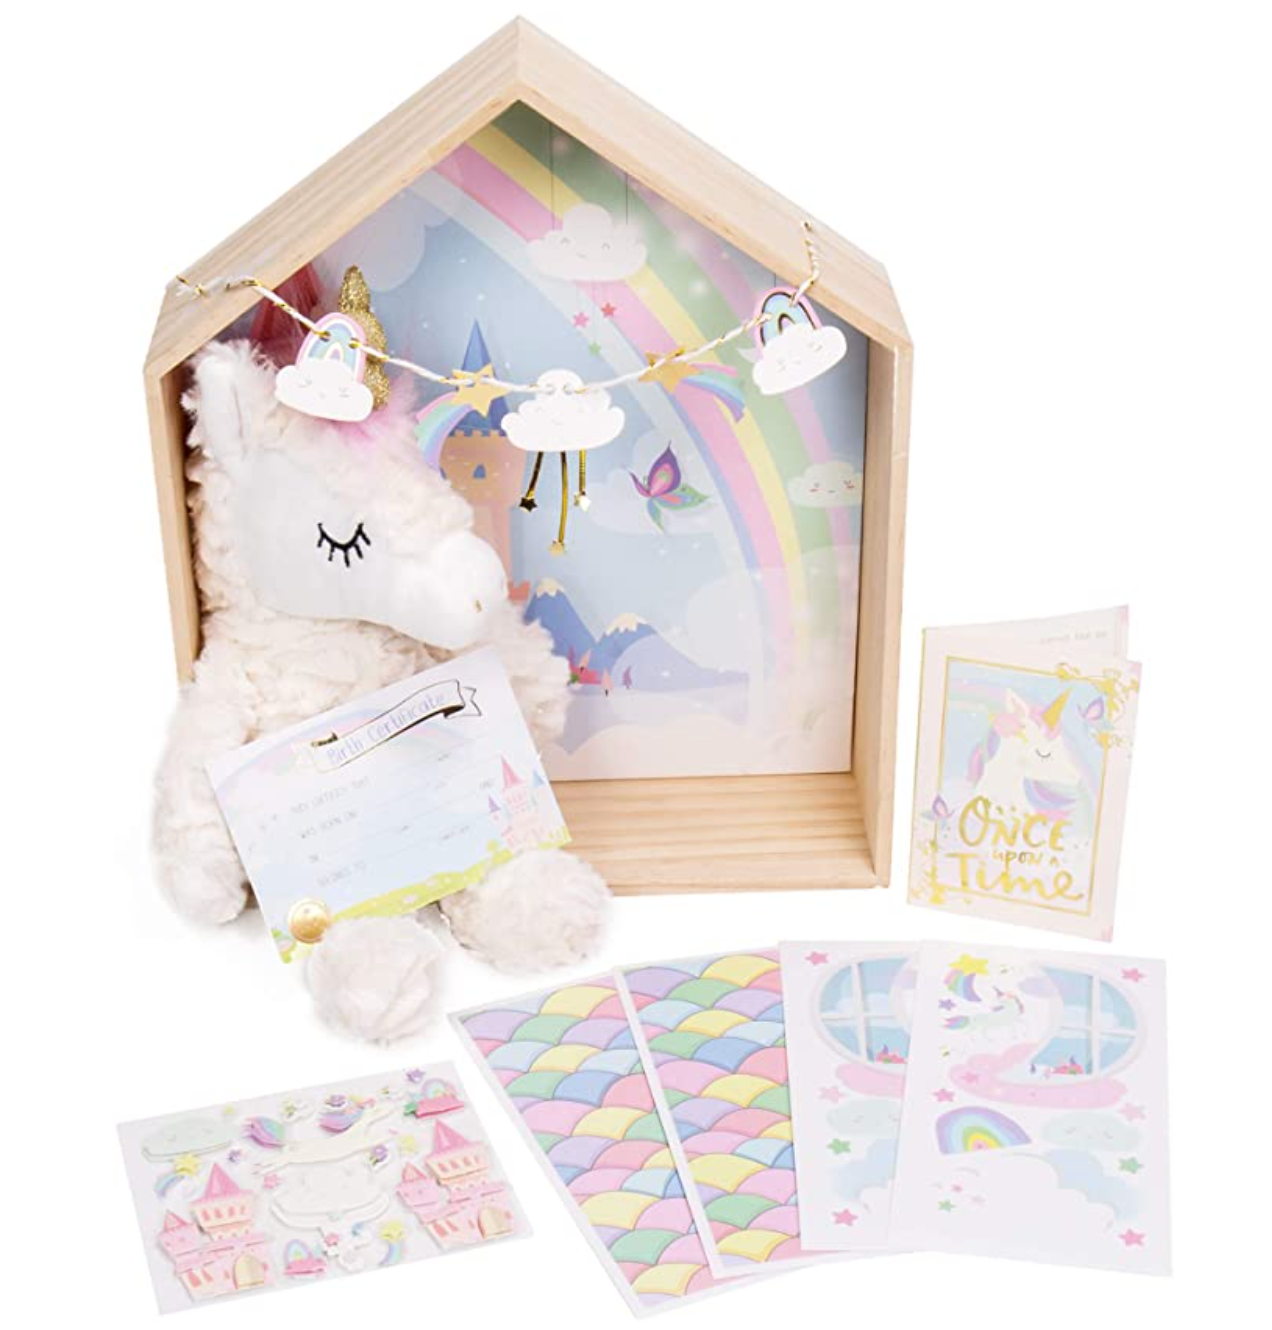 Unicorn Dream Dollhouse